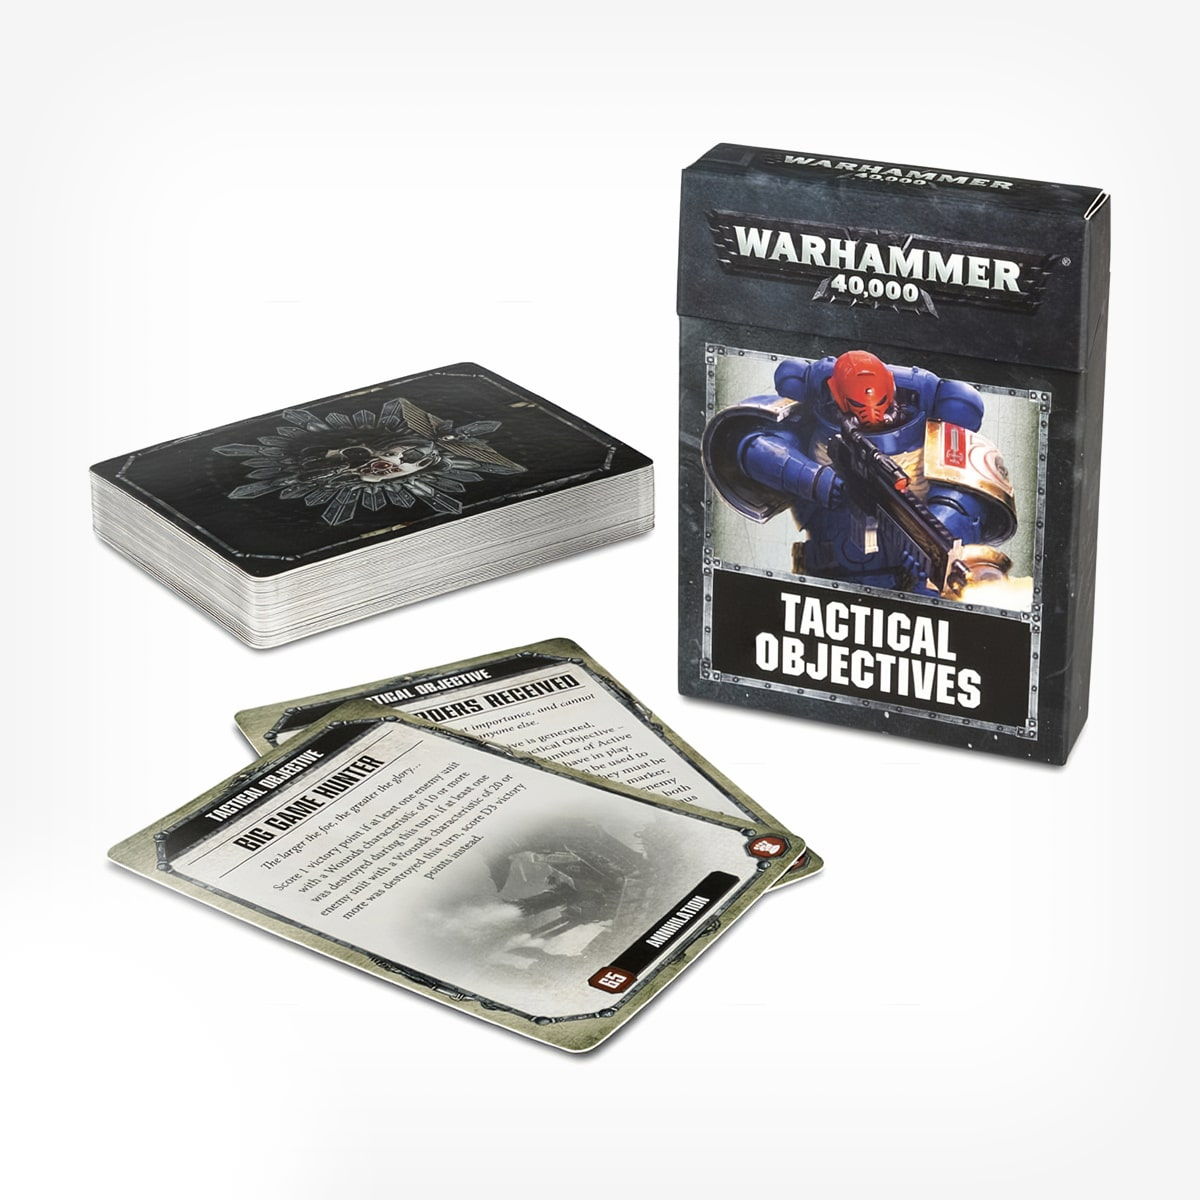 Warhammer cards. Warhammer 40000 карточная игра. MTG Warhammer 40000 на русском карты. Warhammer 40000 - Tactical deployment Mission Pack (Eng).